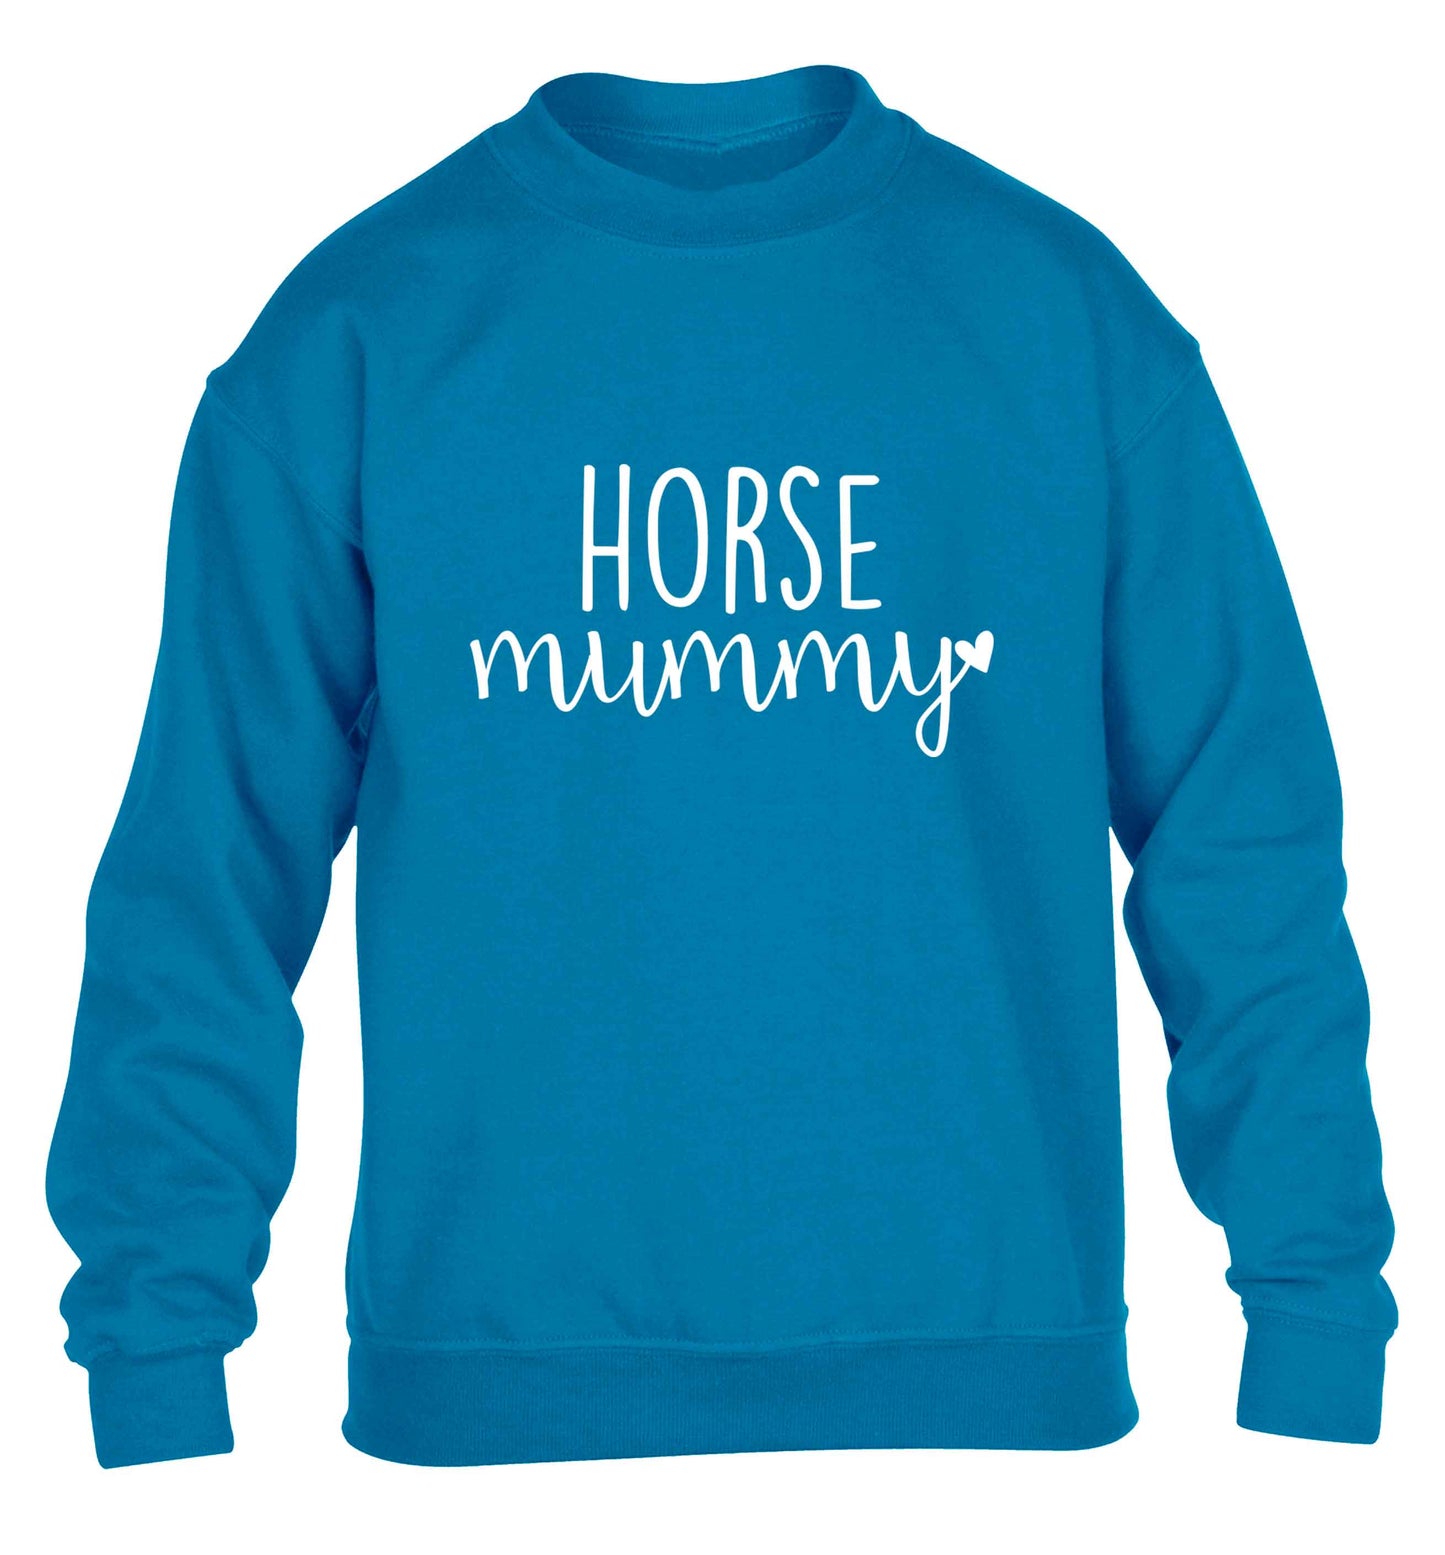 Horse mummy children's blue sweater 12-13 Years